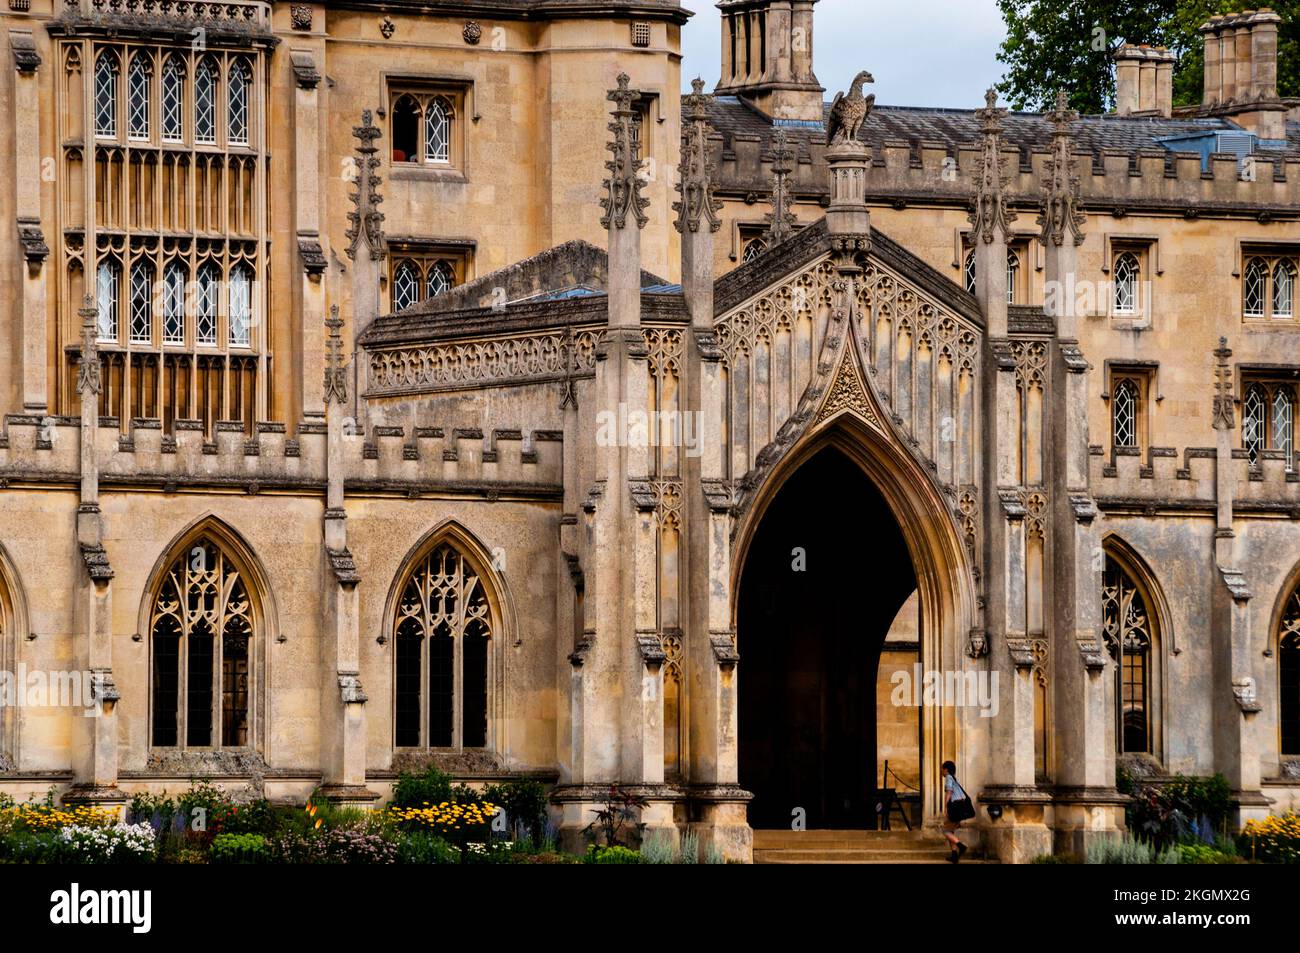 St. John's College, New court, Cambridge University, Cambridge, Angleterre. Banque D'Images